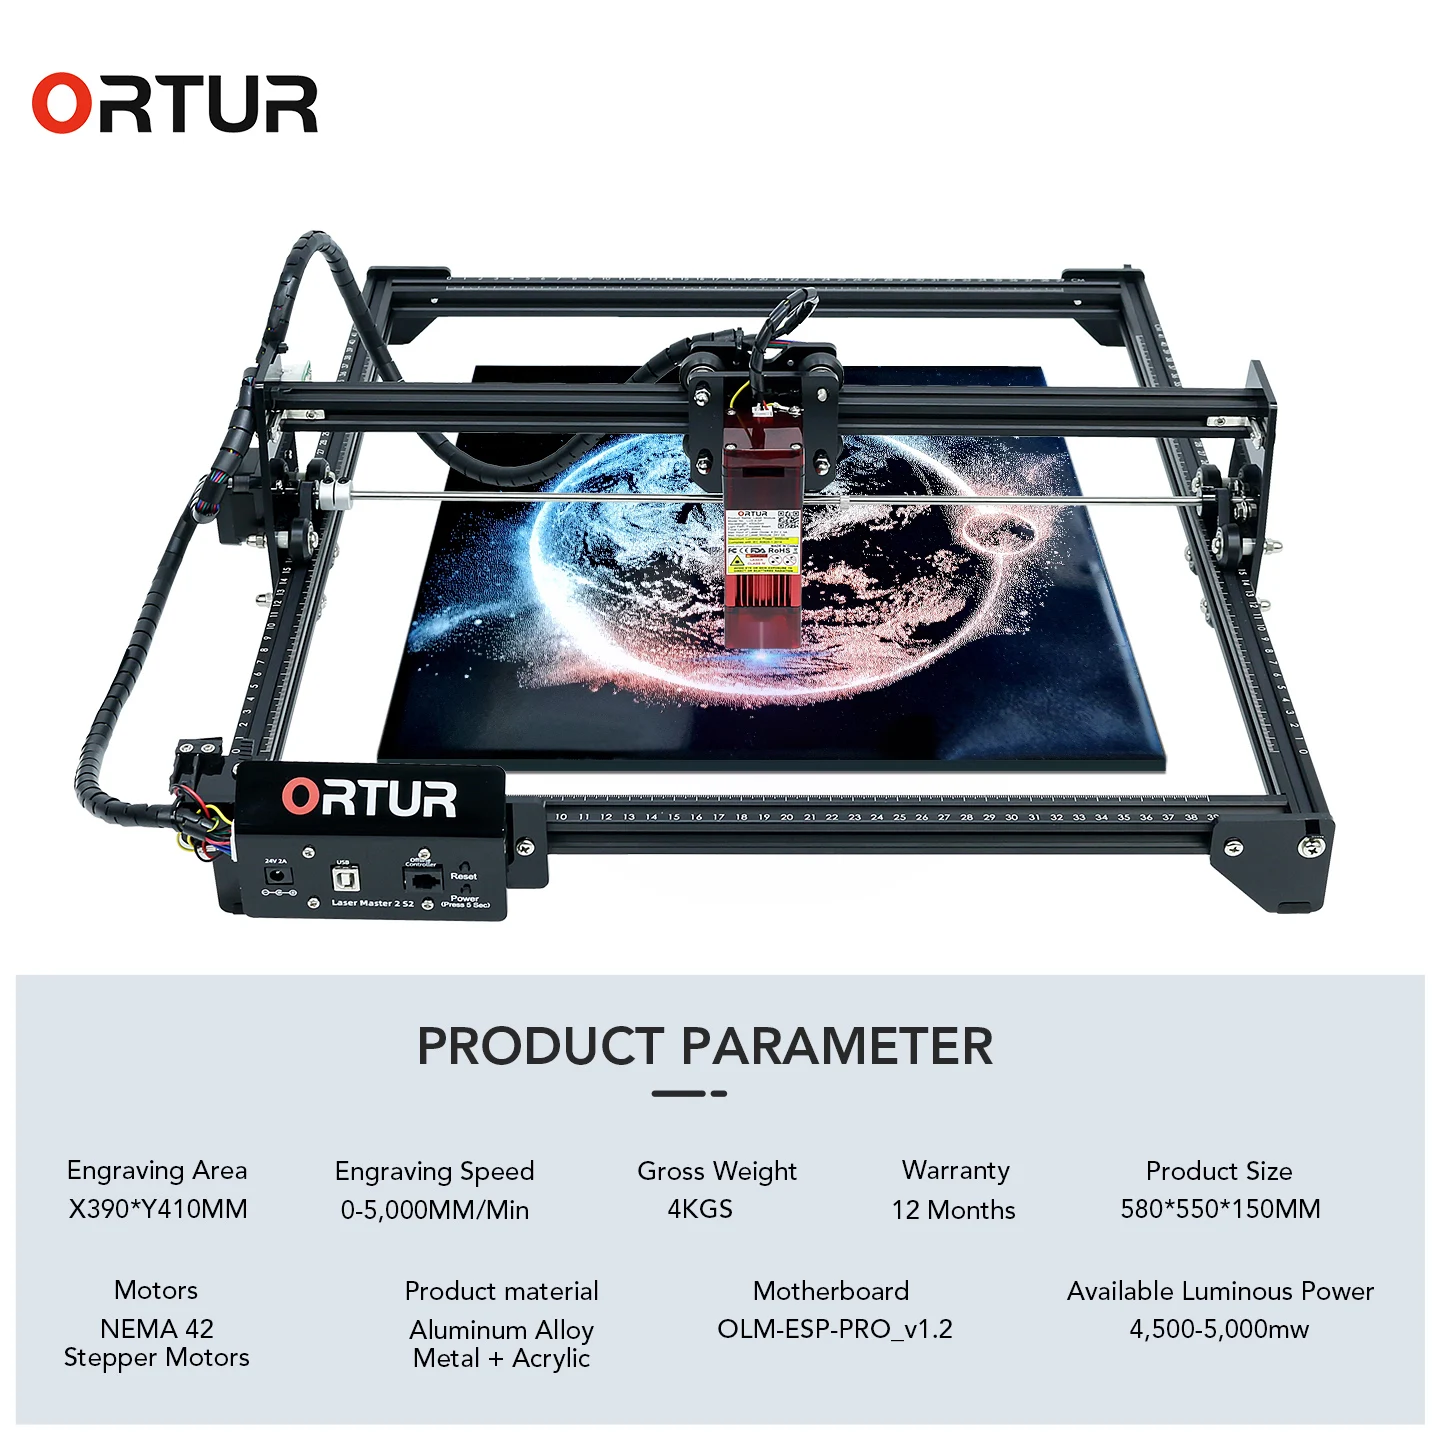 

ORTUR Laser Master 2 32-bit Motherboard Laser Engraving Machine Upgraded LU2-4 Second Generation FAC Laser Fixed- Focus Module